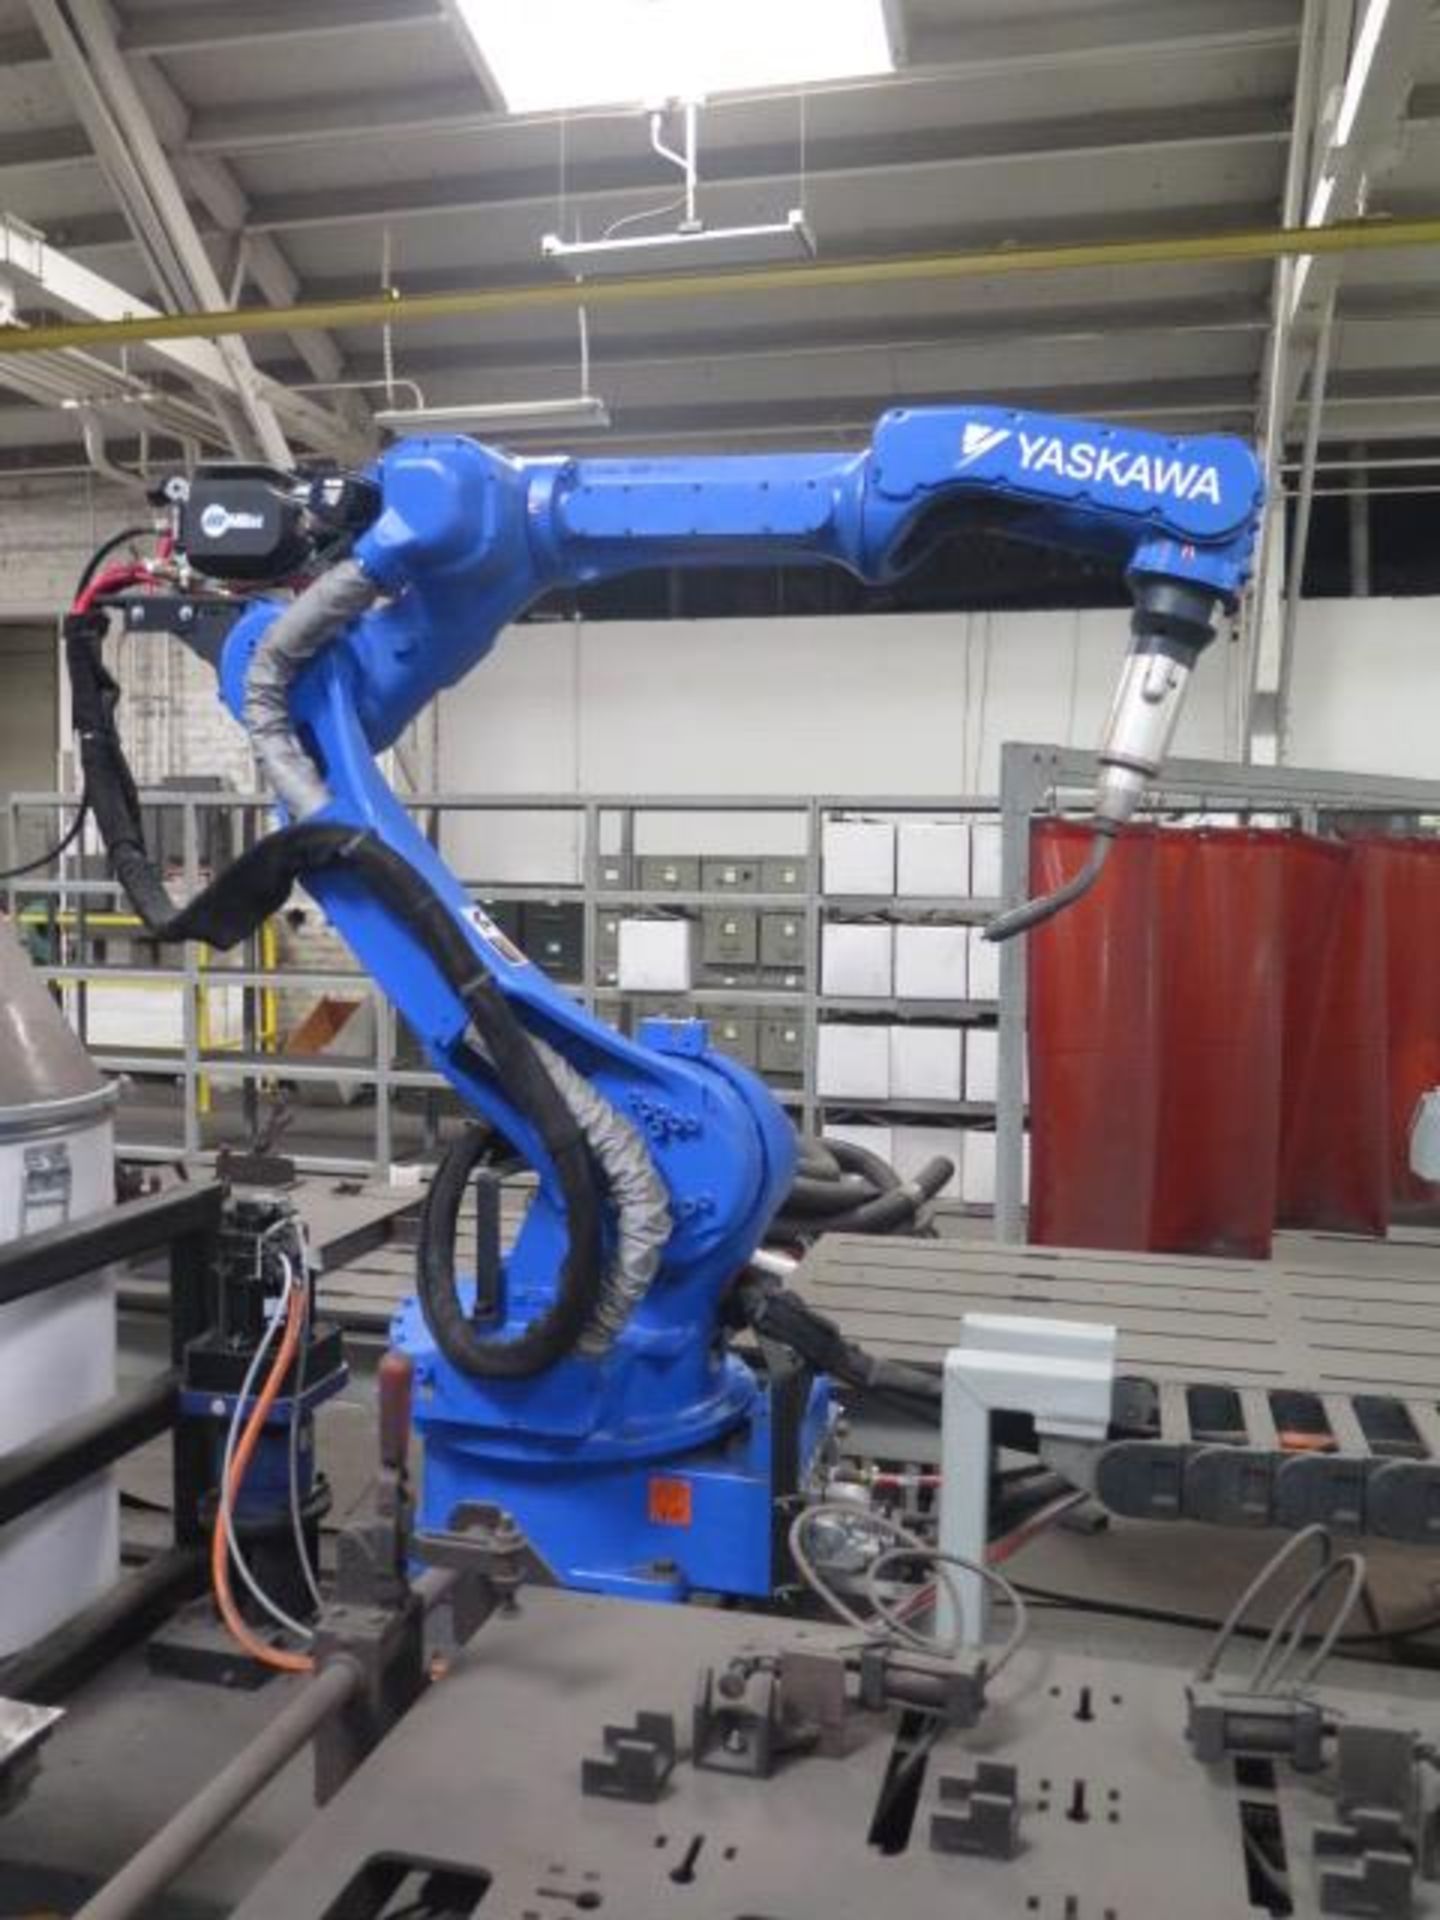 Used Yaskawa Motoman Robots for Welding Automation